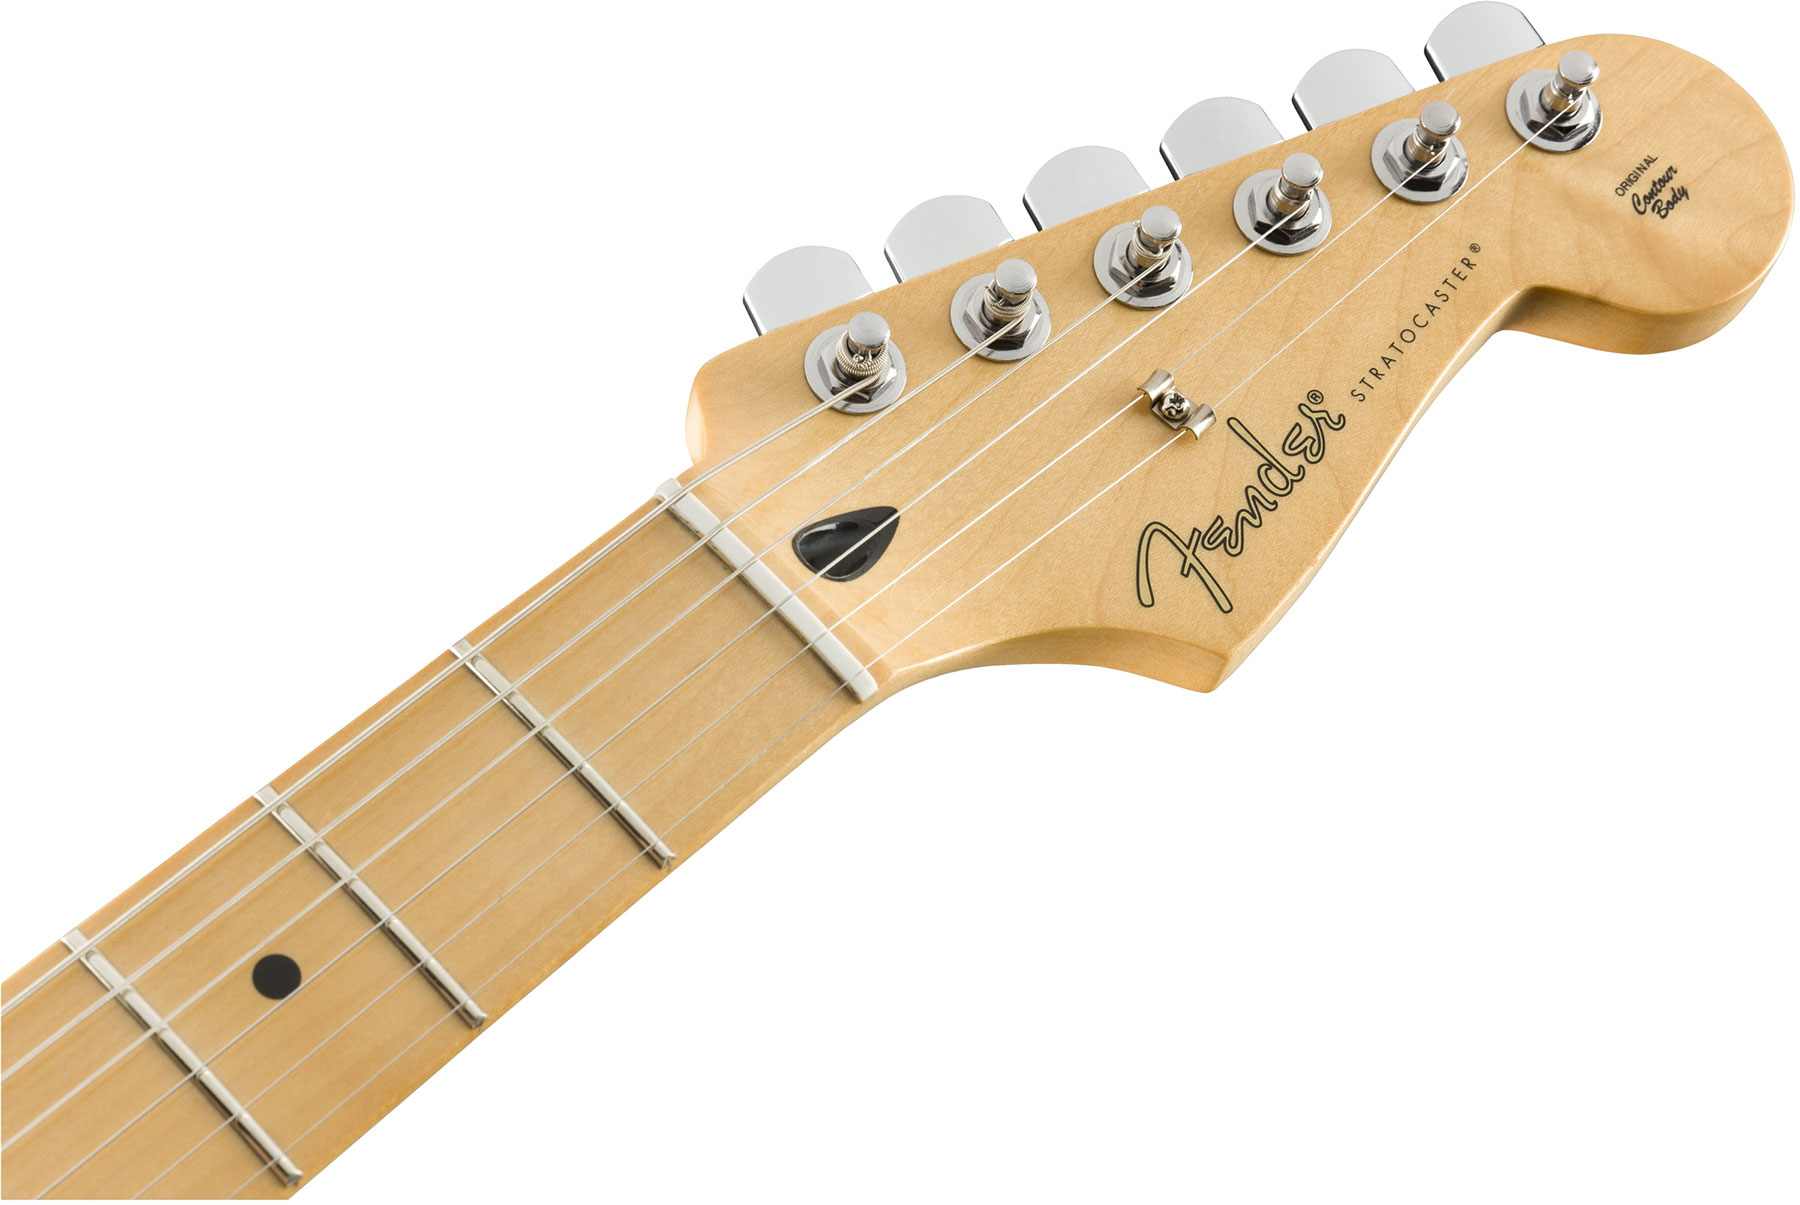 Fender Strat Player Hss Plus Top Fsr Ltd 2019 Mex Mn - Sienna Sunburst - Guitare Électrique Forme Str - Variation 1